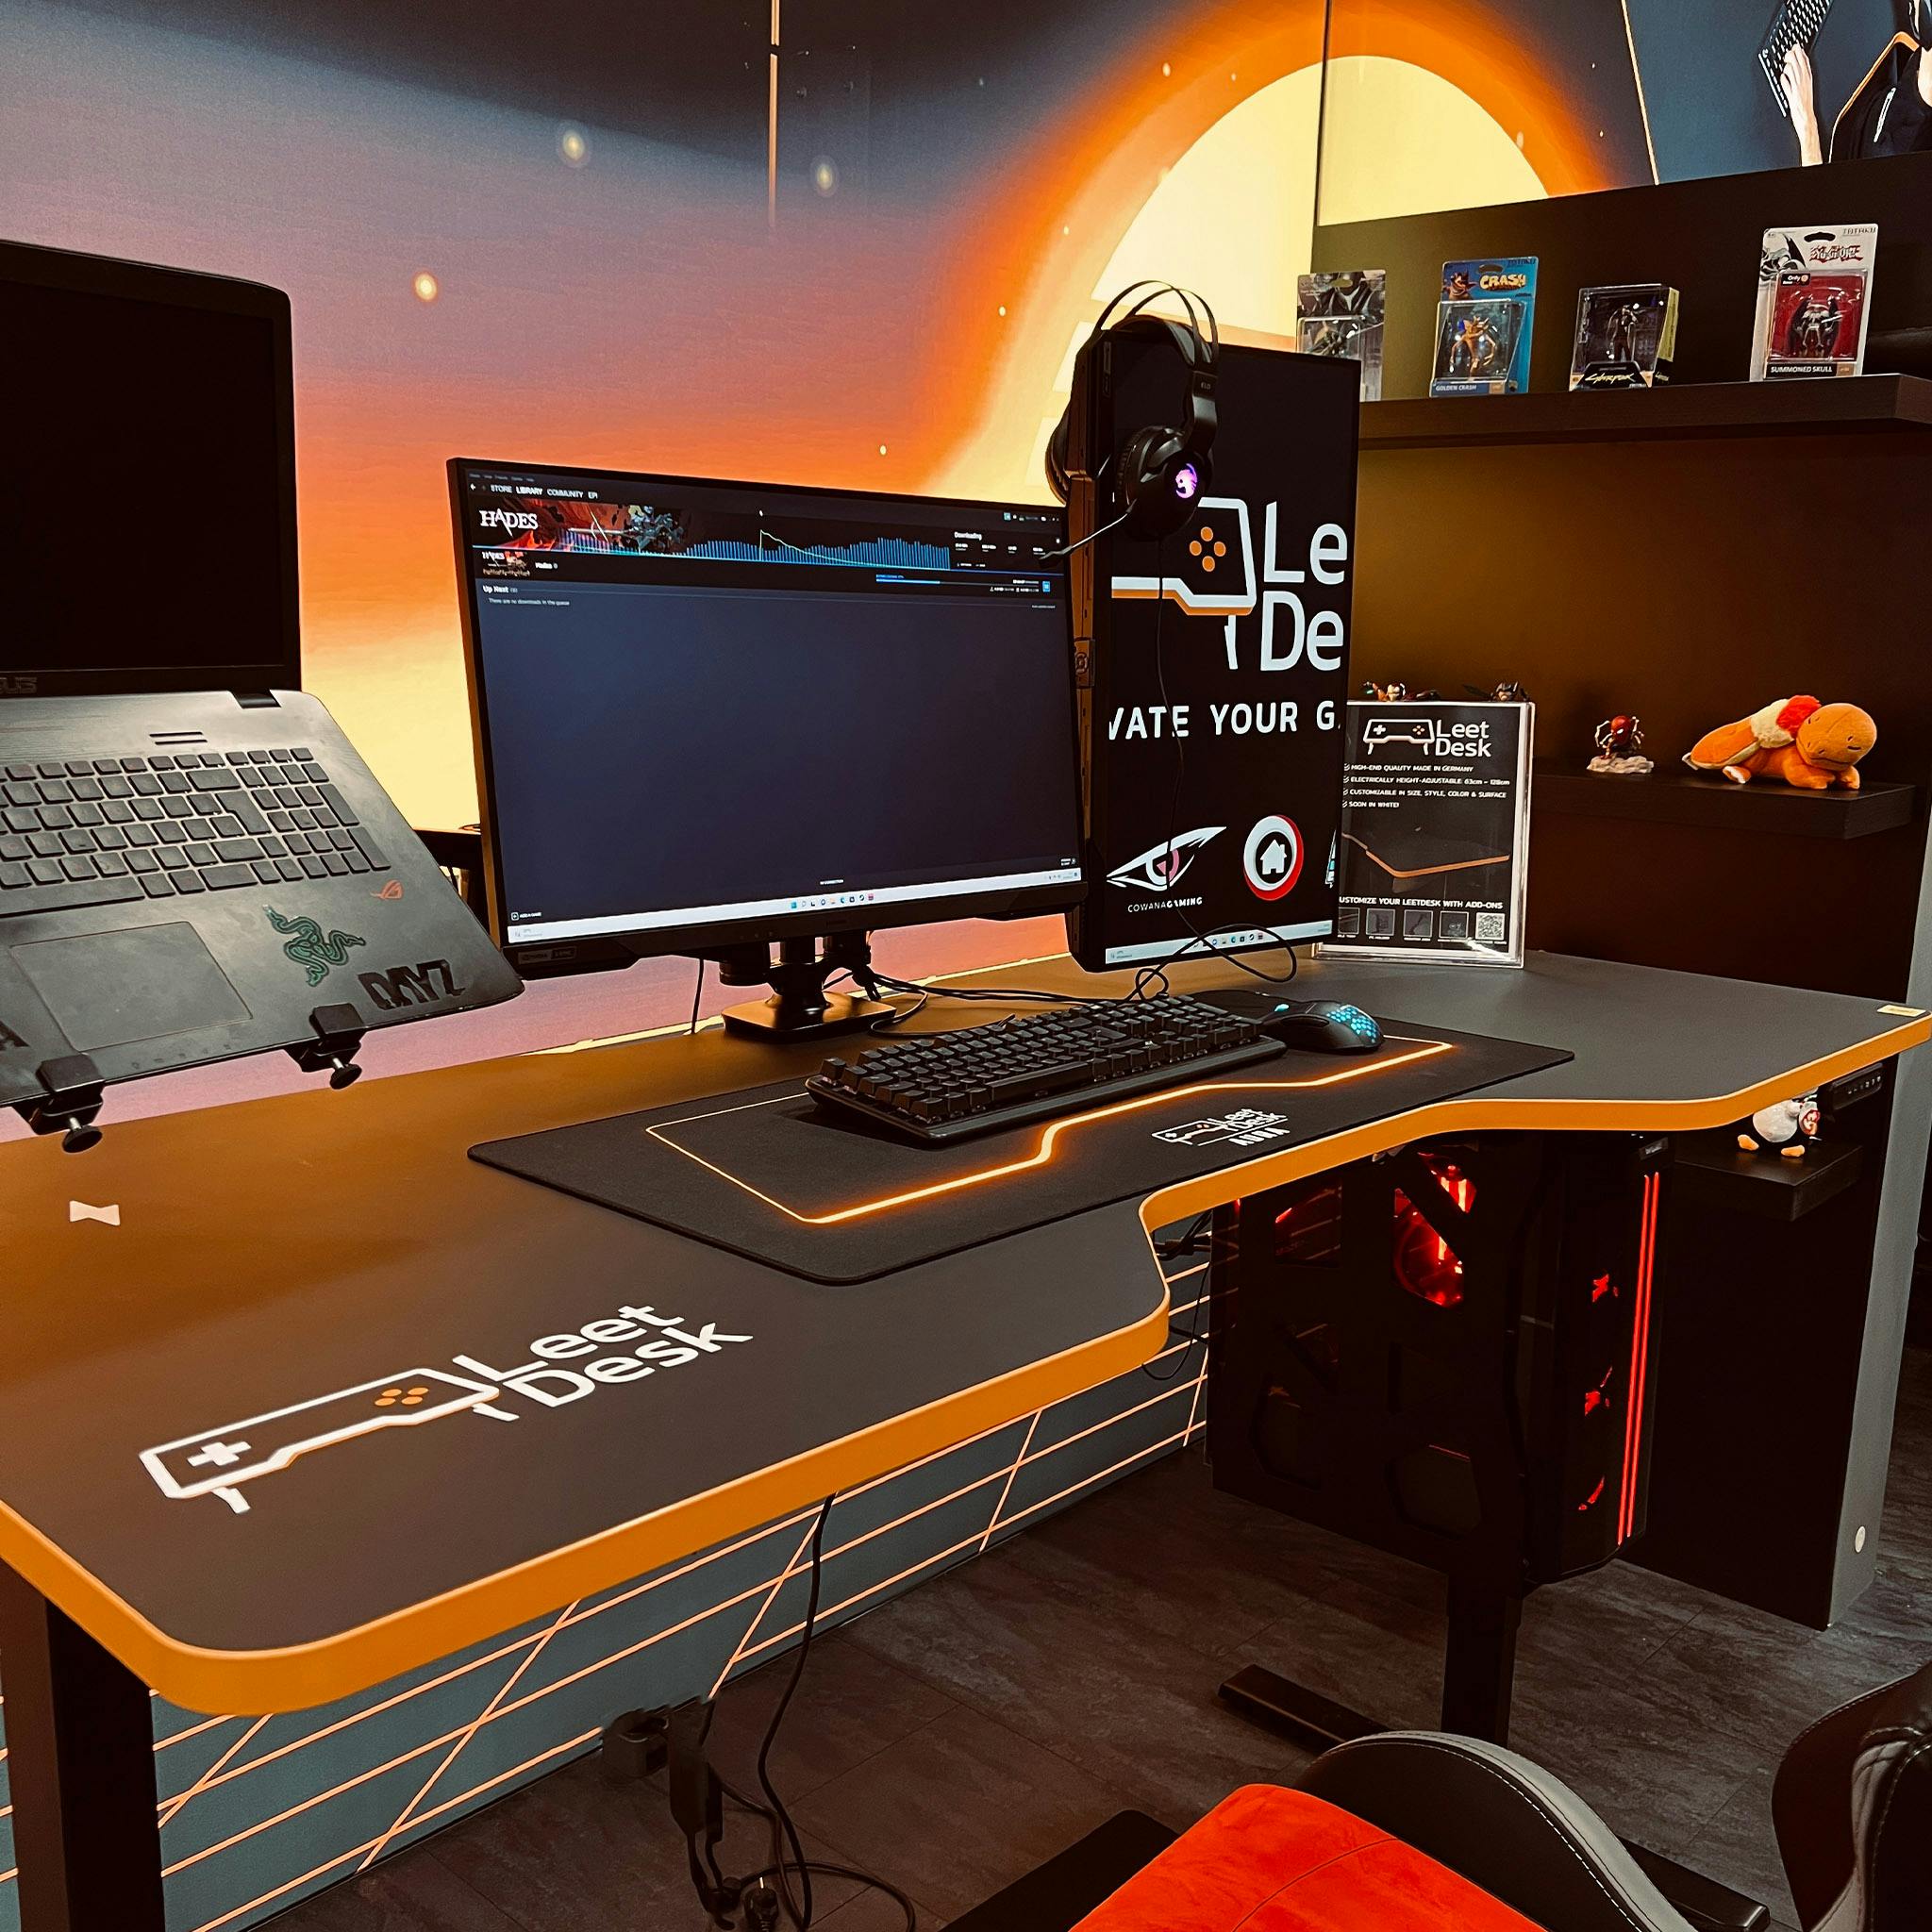 Best Height Adjustable PC Gaming Desk 2022